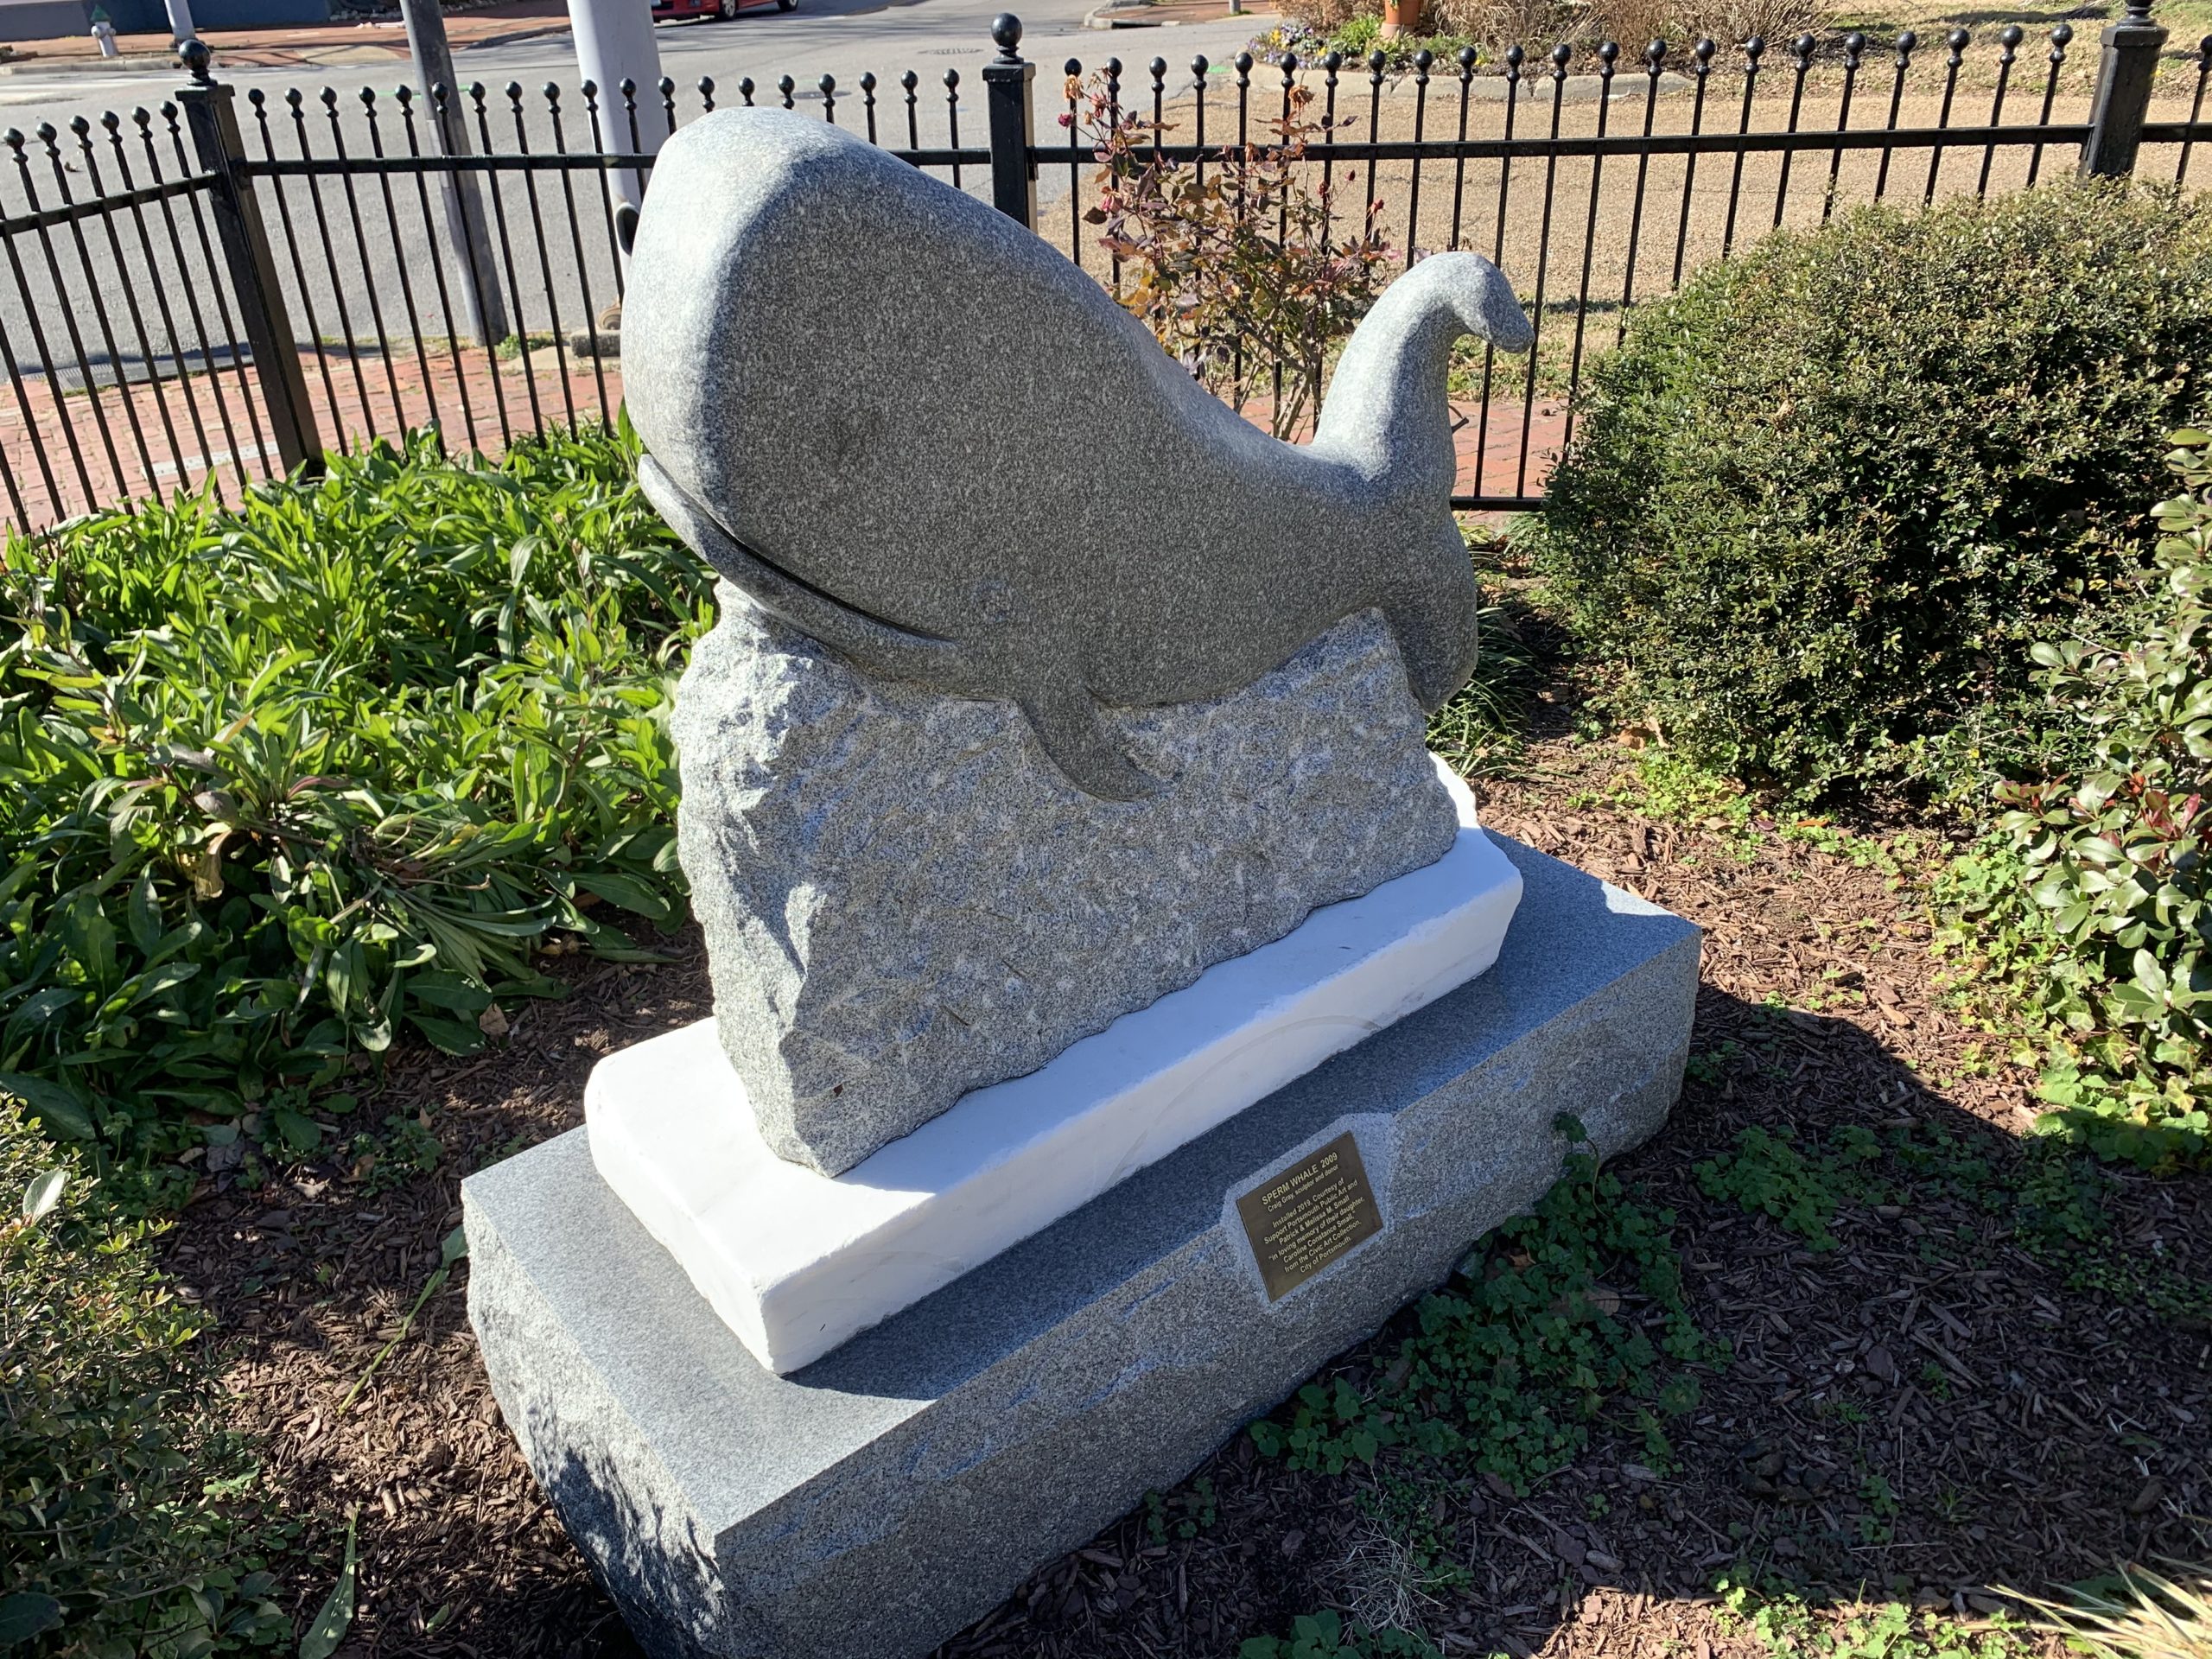 Concrete statue of sperm whale in park setting